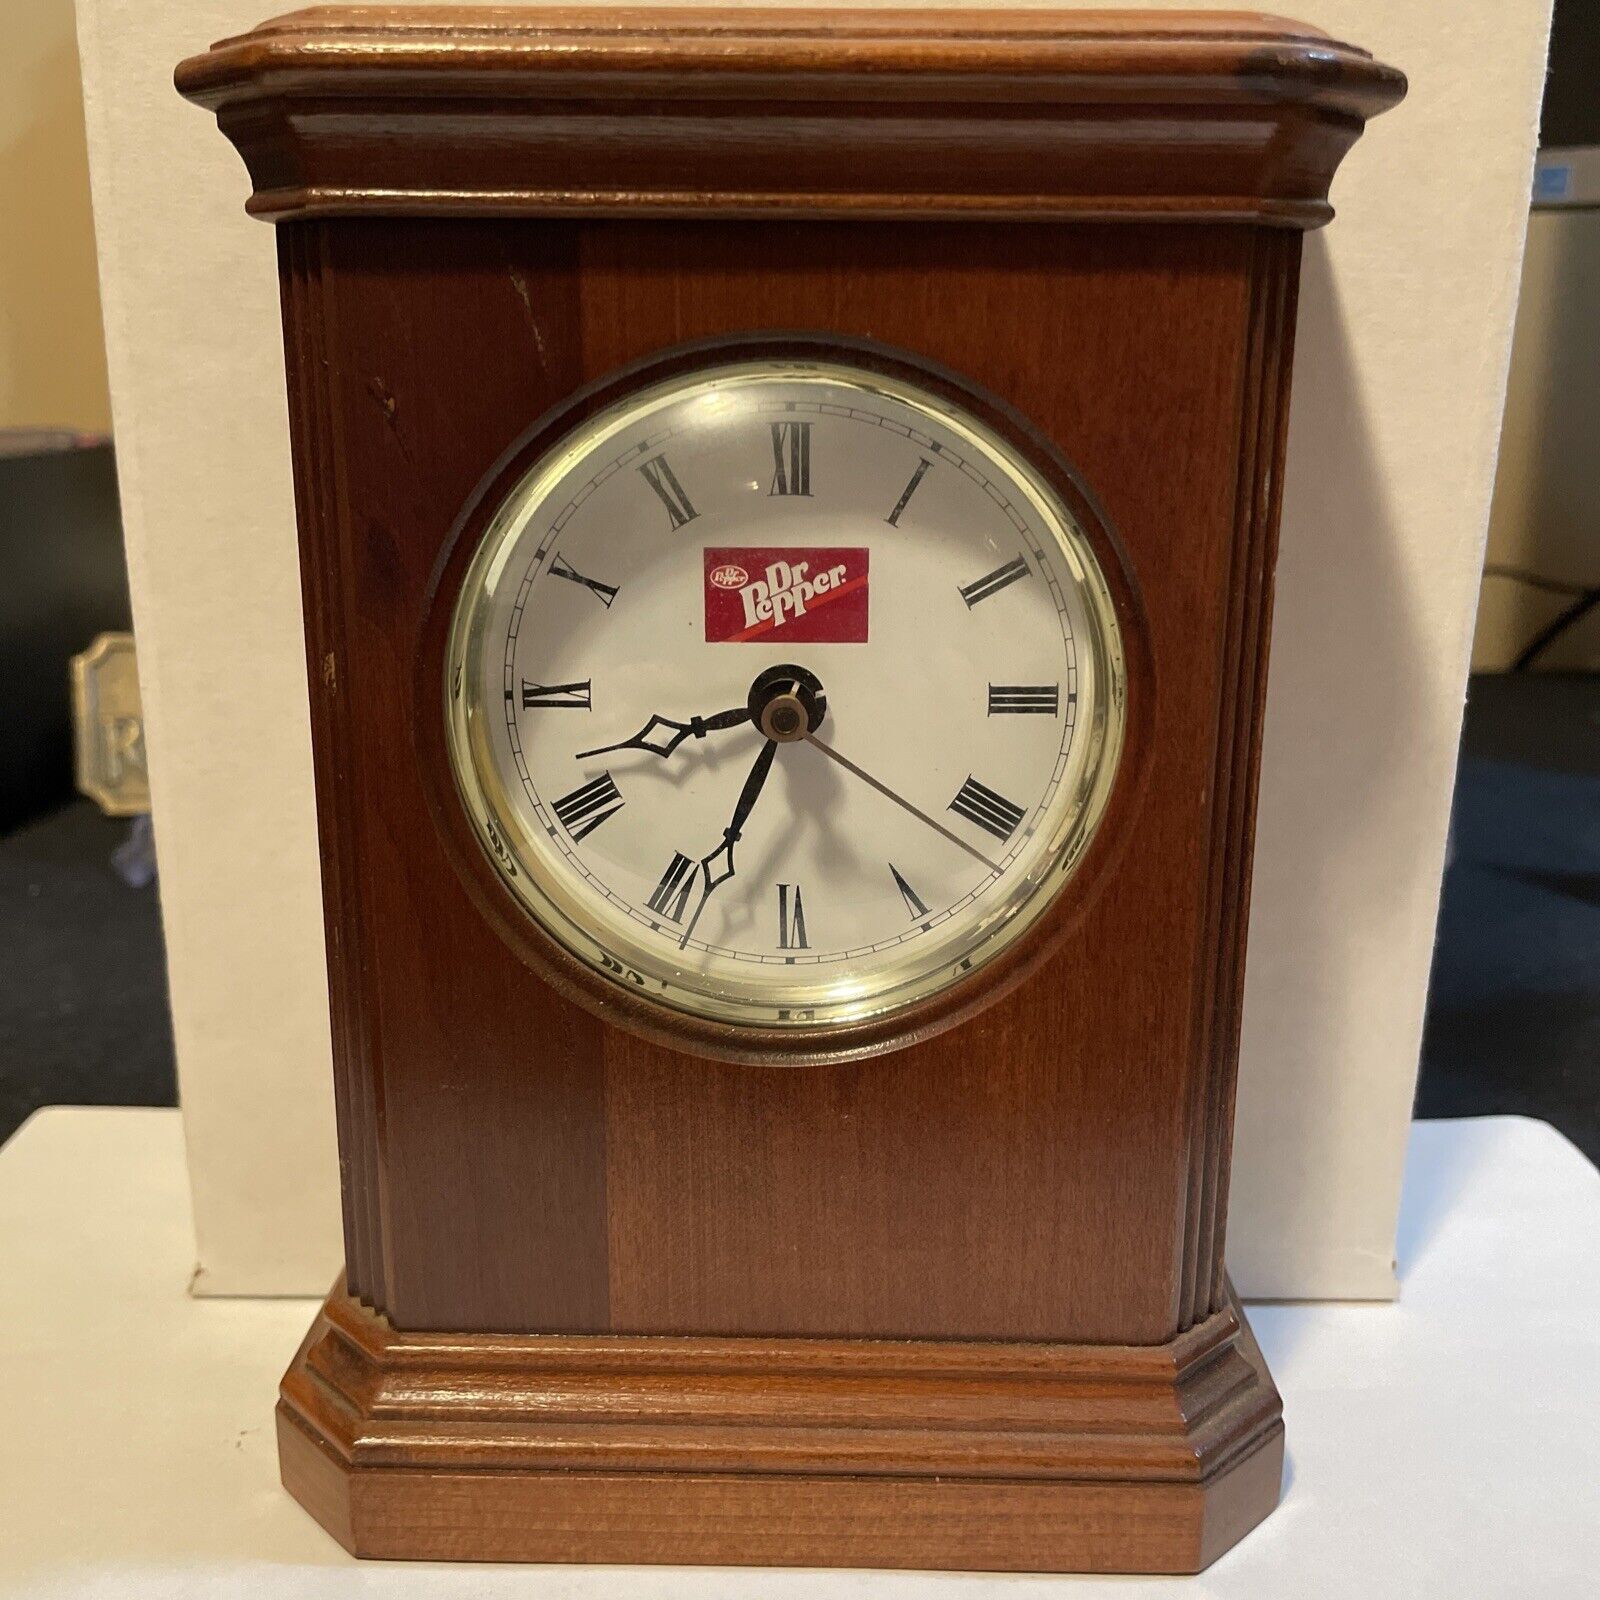 RARE DR PEPPER Desk Clock.  Very Nice Collectors Piece. Working. Vintage Piece